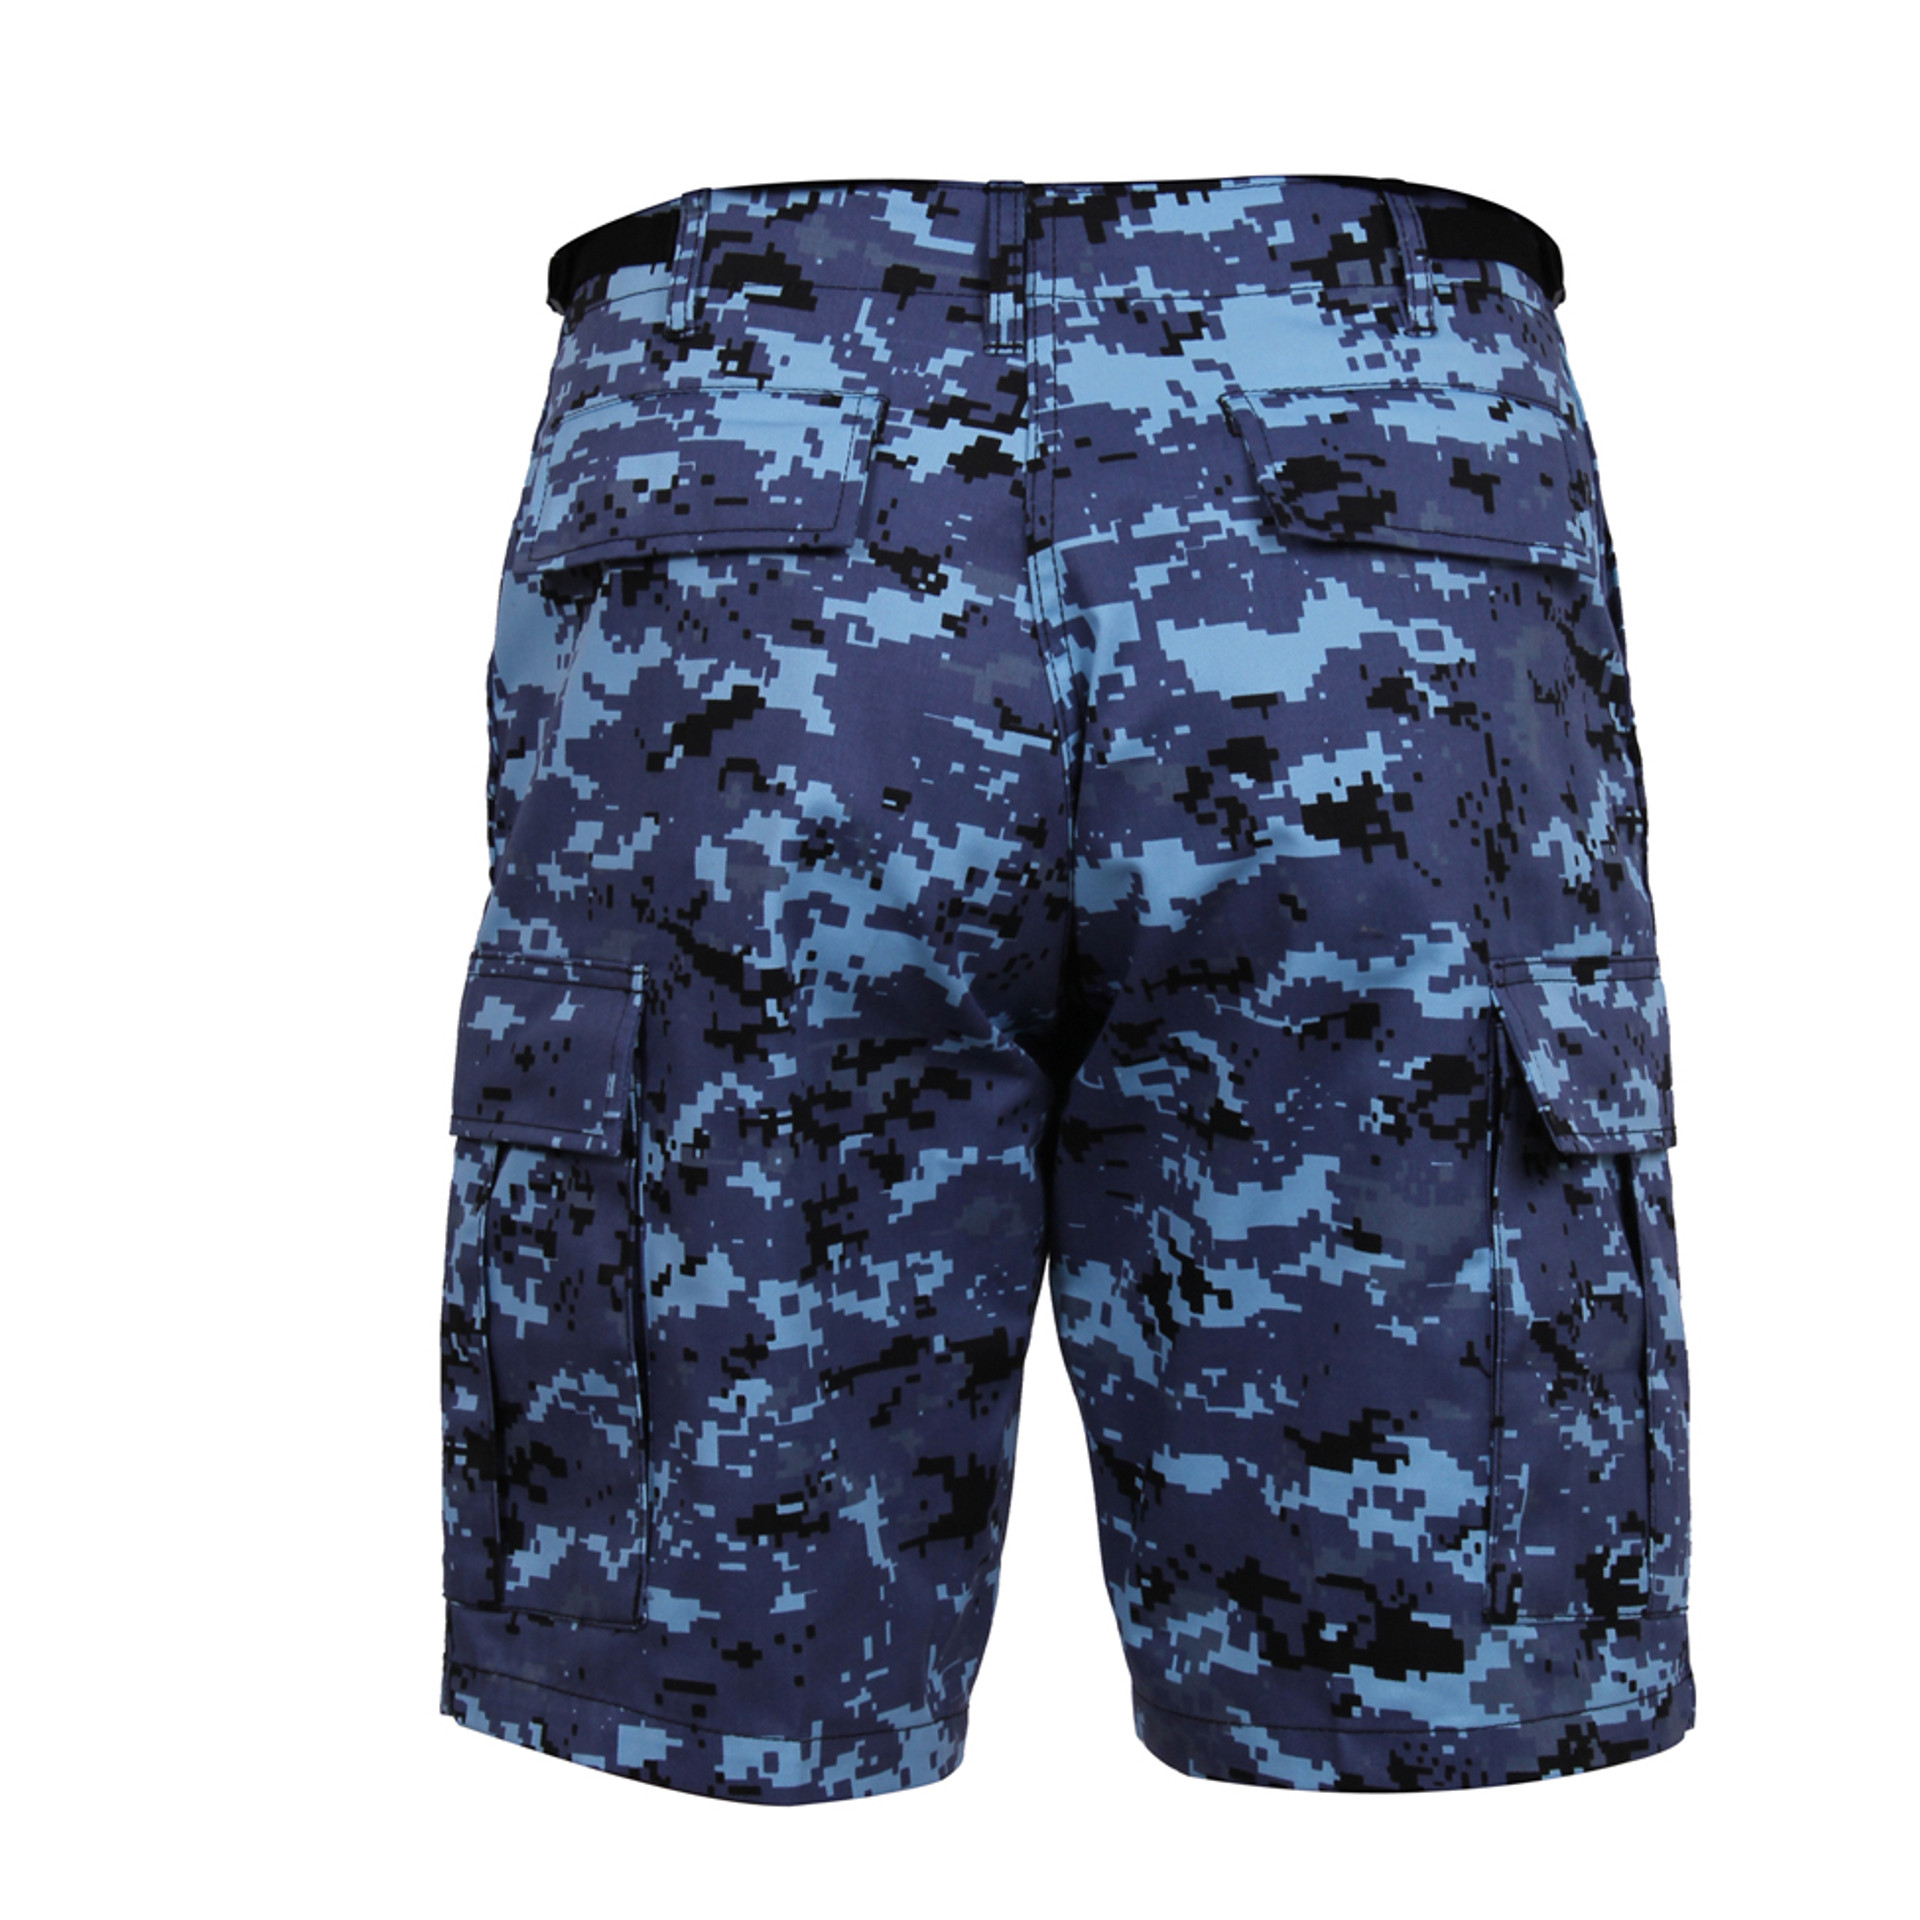 Shop Blue Digital Camo Military Shorts - Fatigues Army Navy